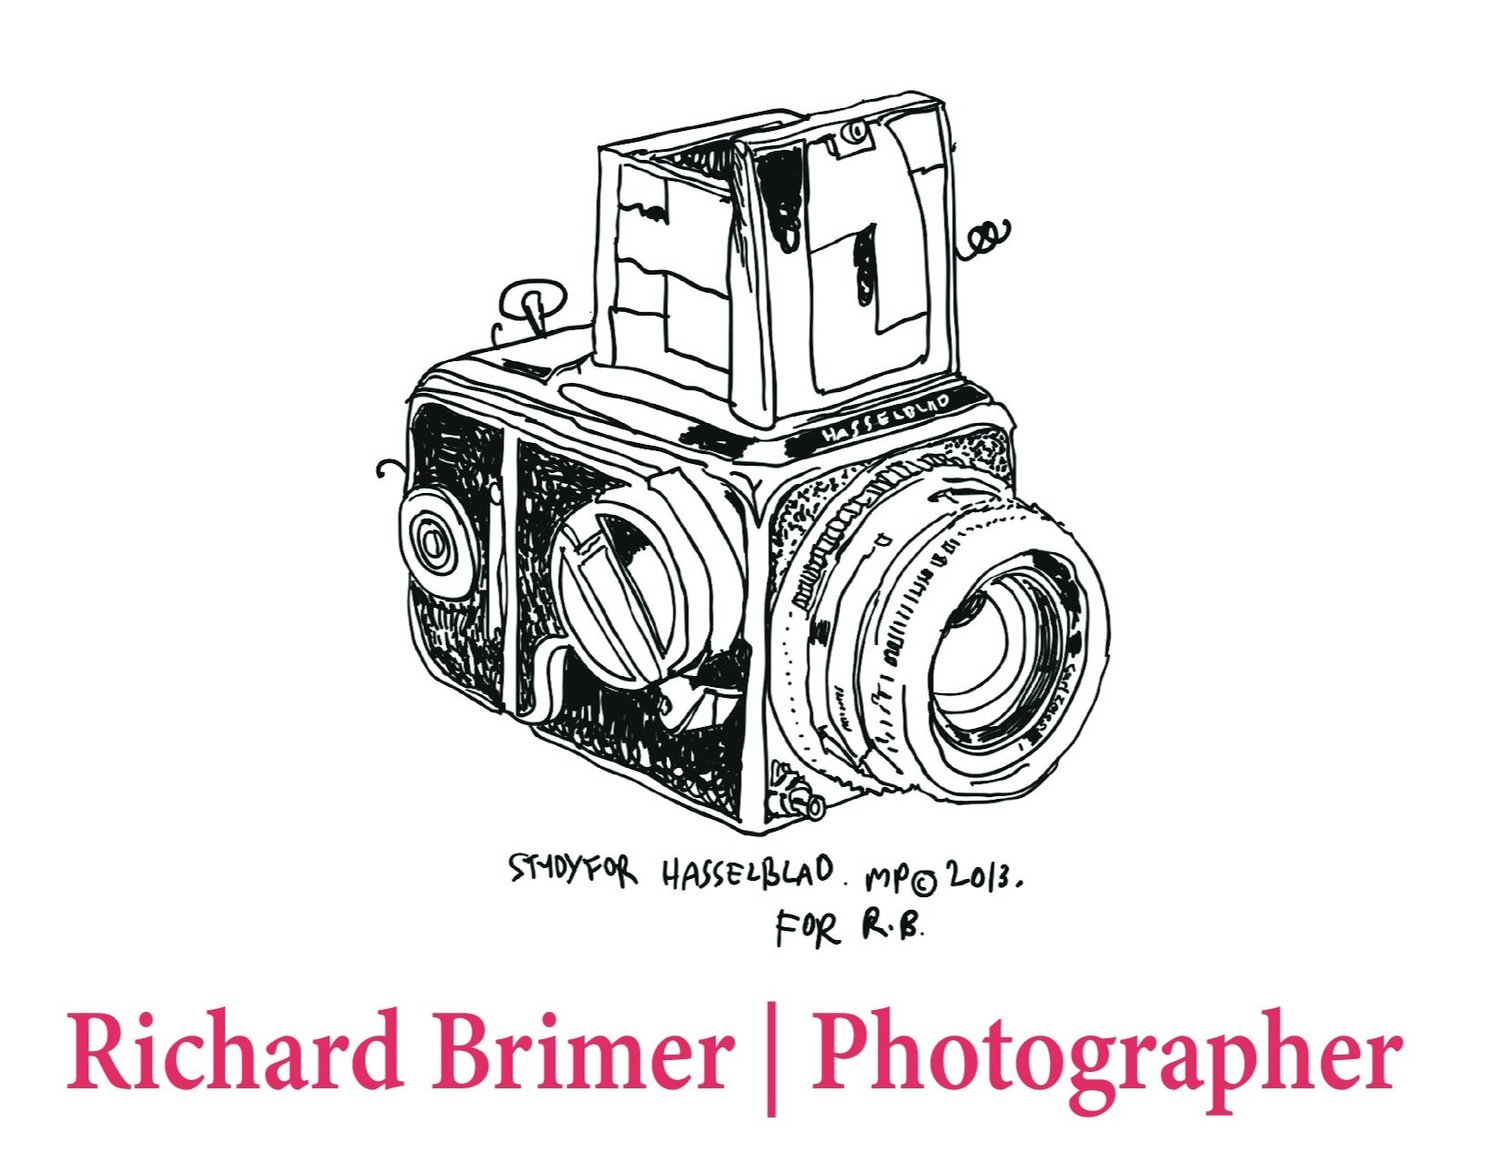 Richard Brimer Photographer